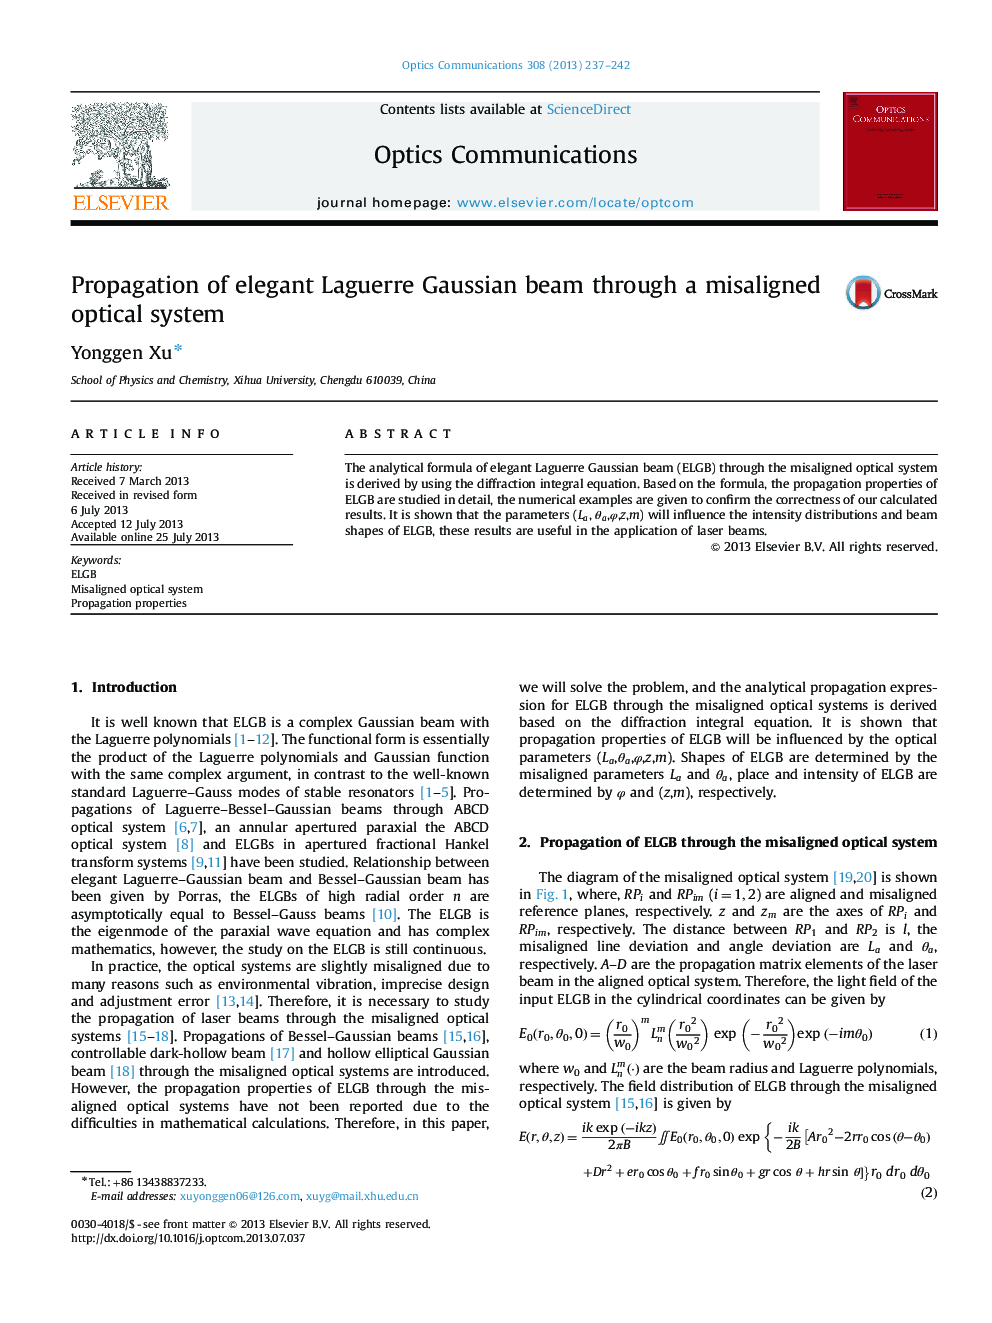 Propagation of elegant Laguerre Gaussian beam through a misaligned optical system